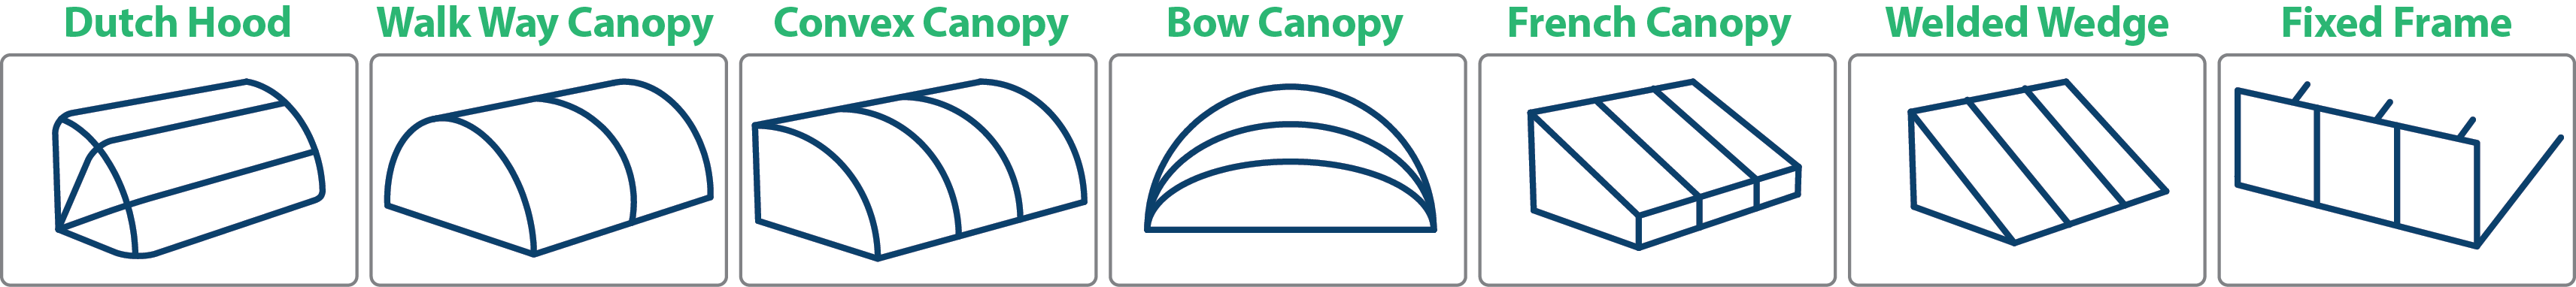 Canopy Styles